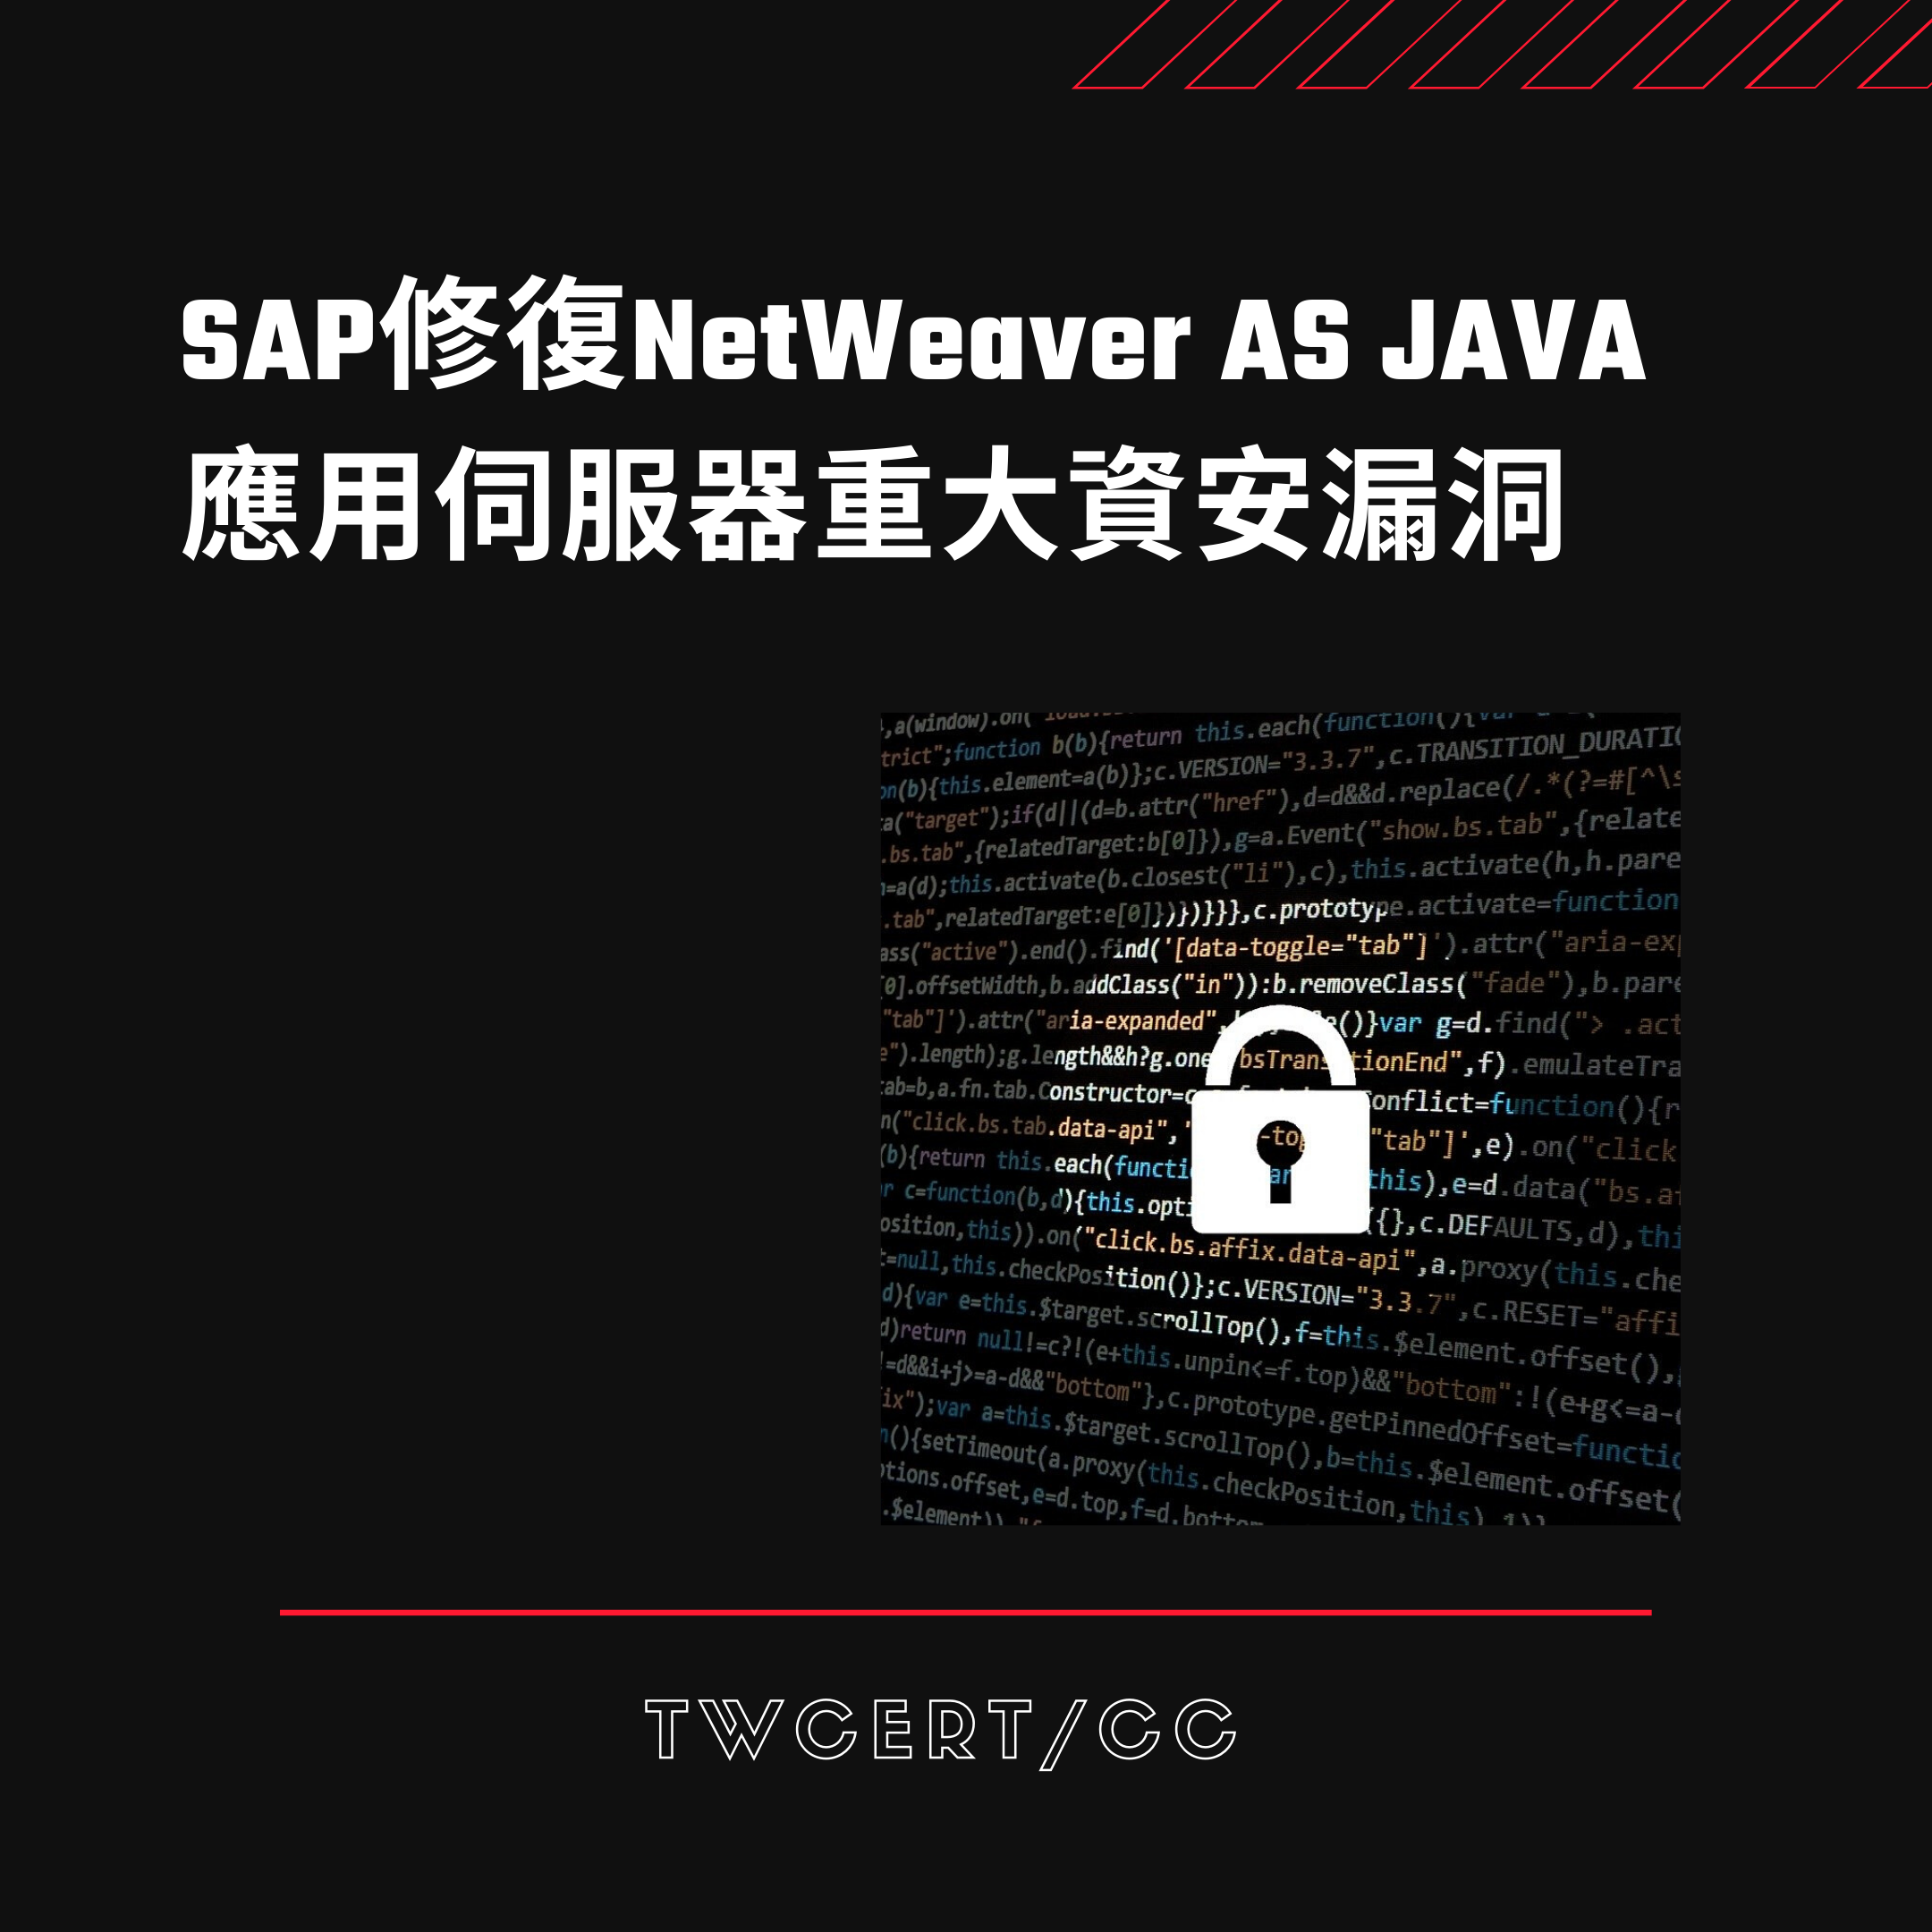 SAP修復NetWeaver AS JAVA 應用伺服器重大資安漏洞 TWCERT/CC